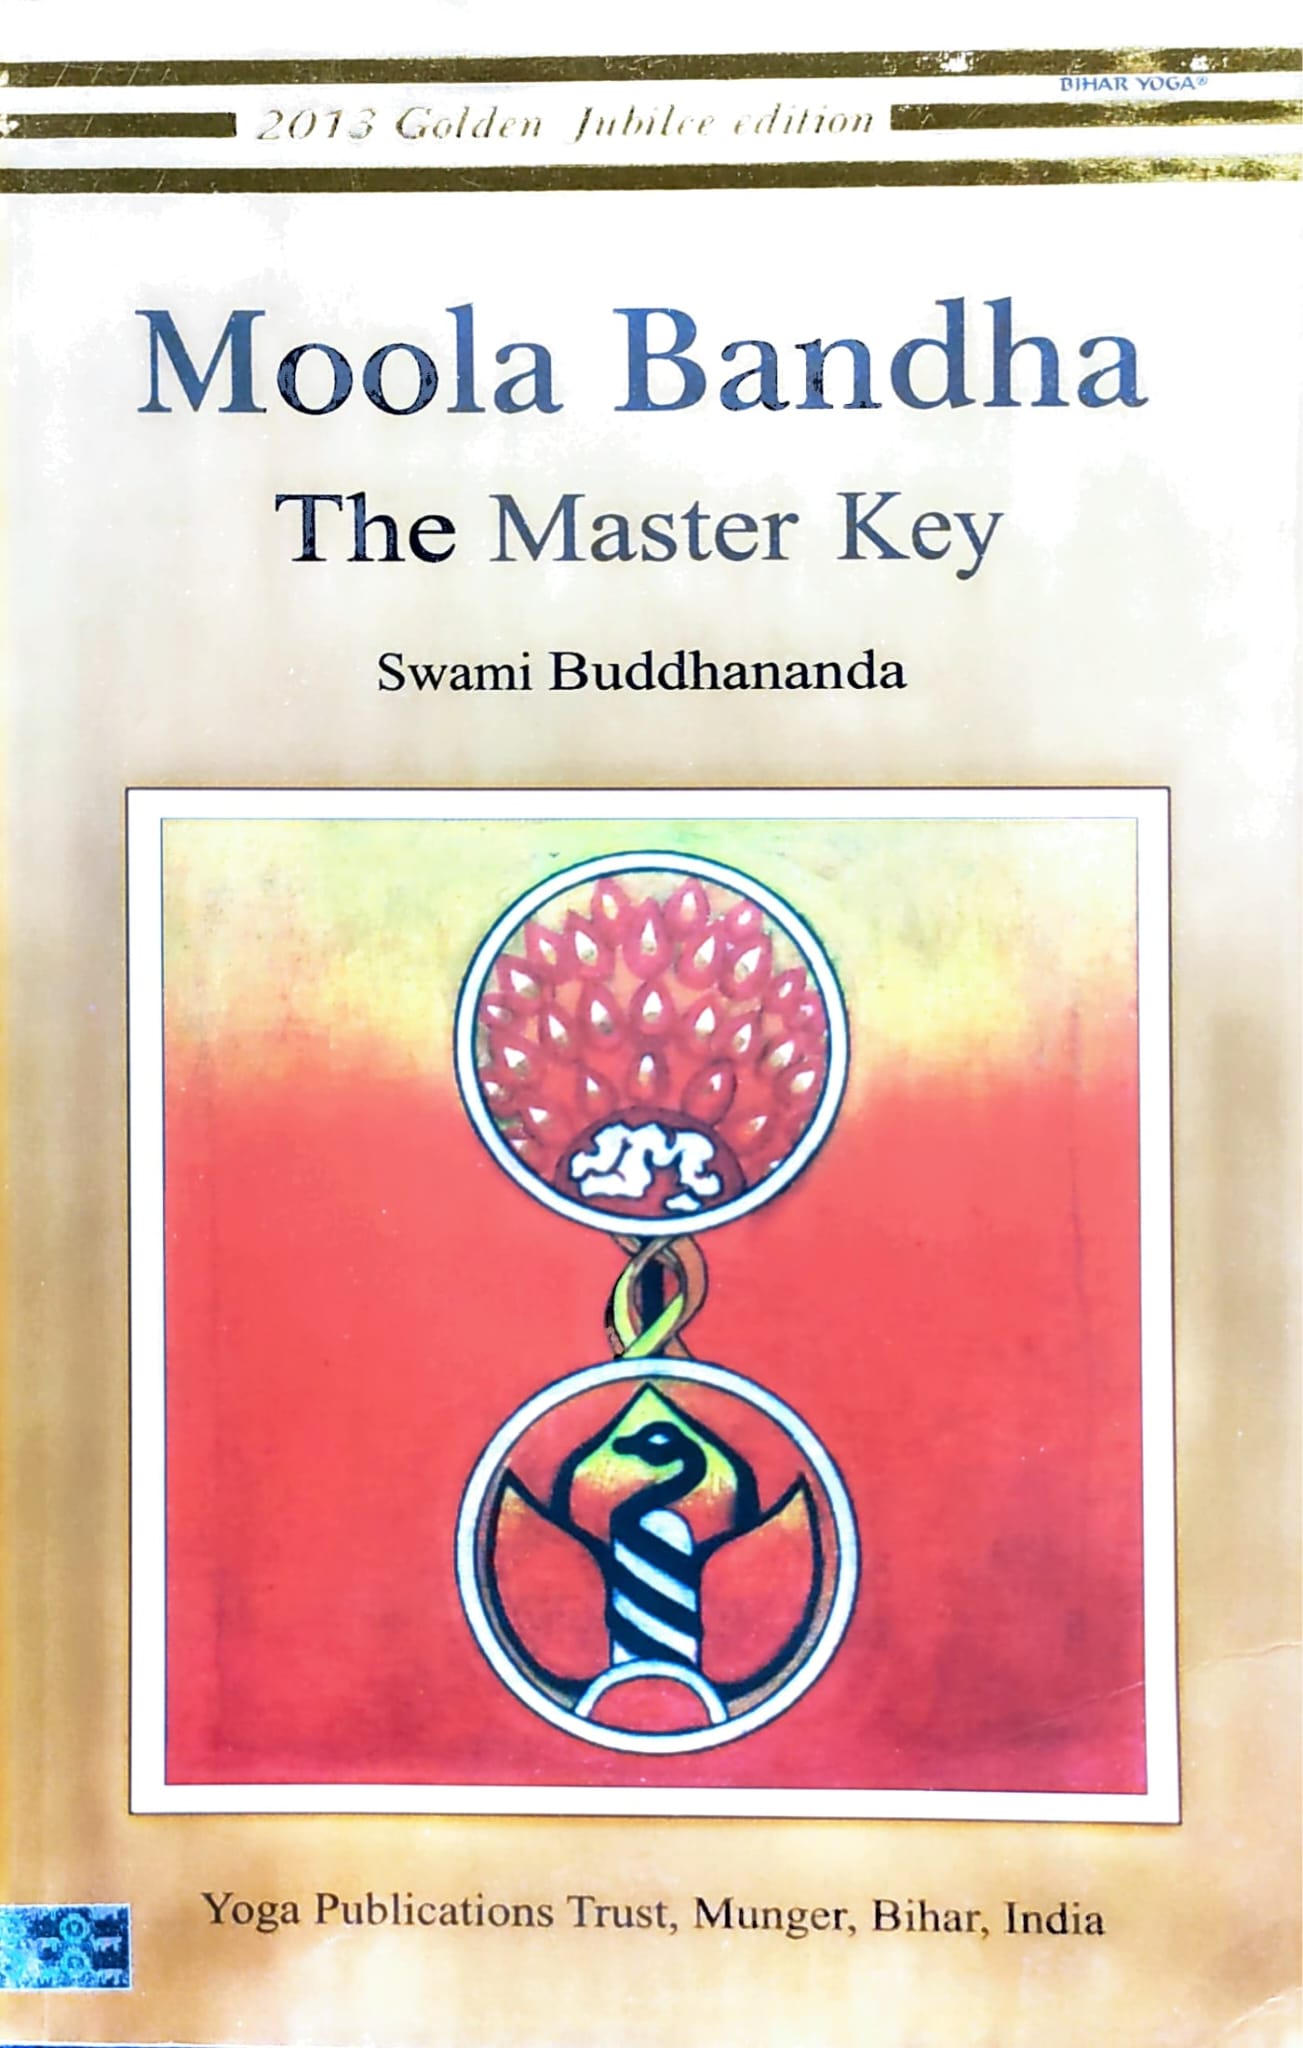 Moola Bandha - The Master key